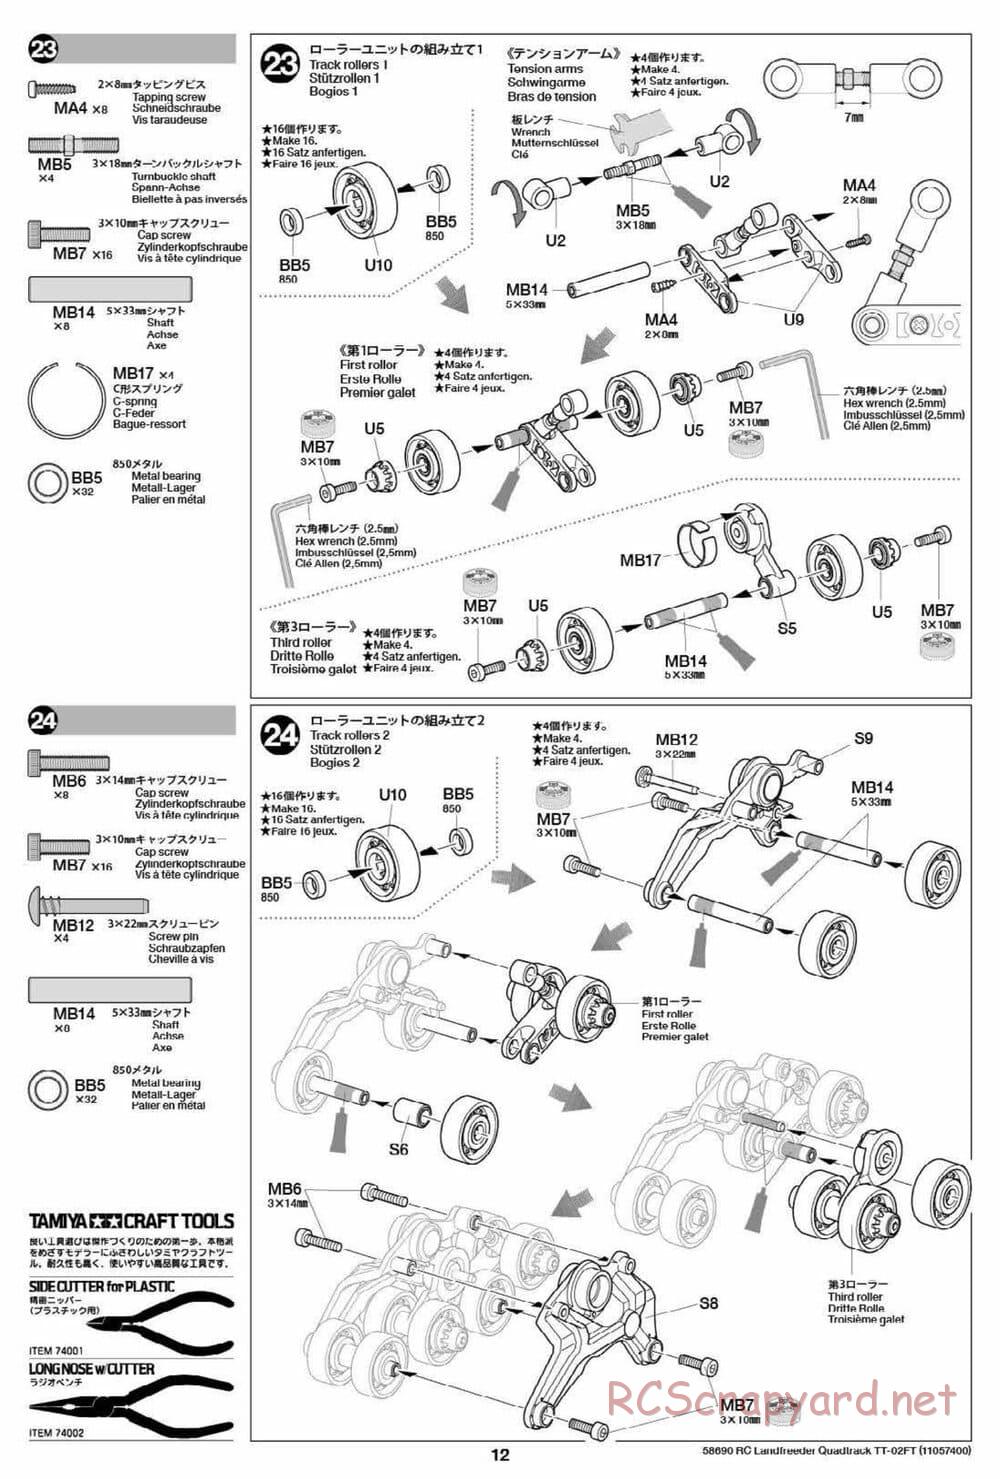 Tamiya - Landfreeder Quadtrack - TT-02FT Chassis - Manual - Page 12